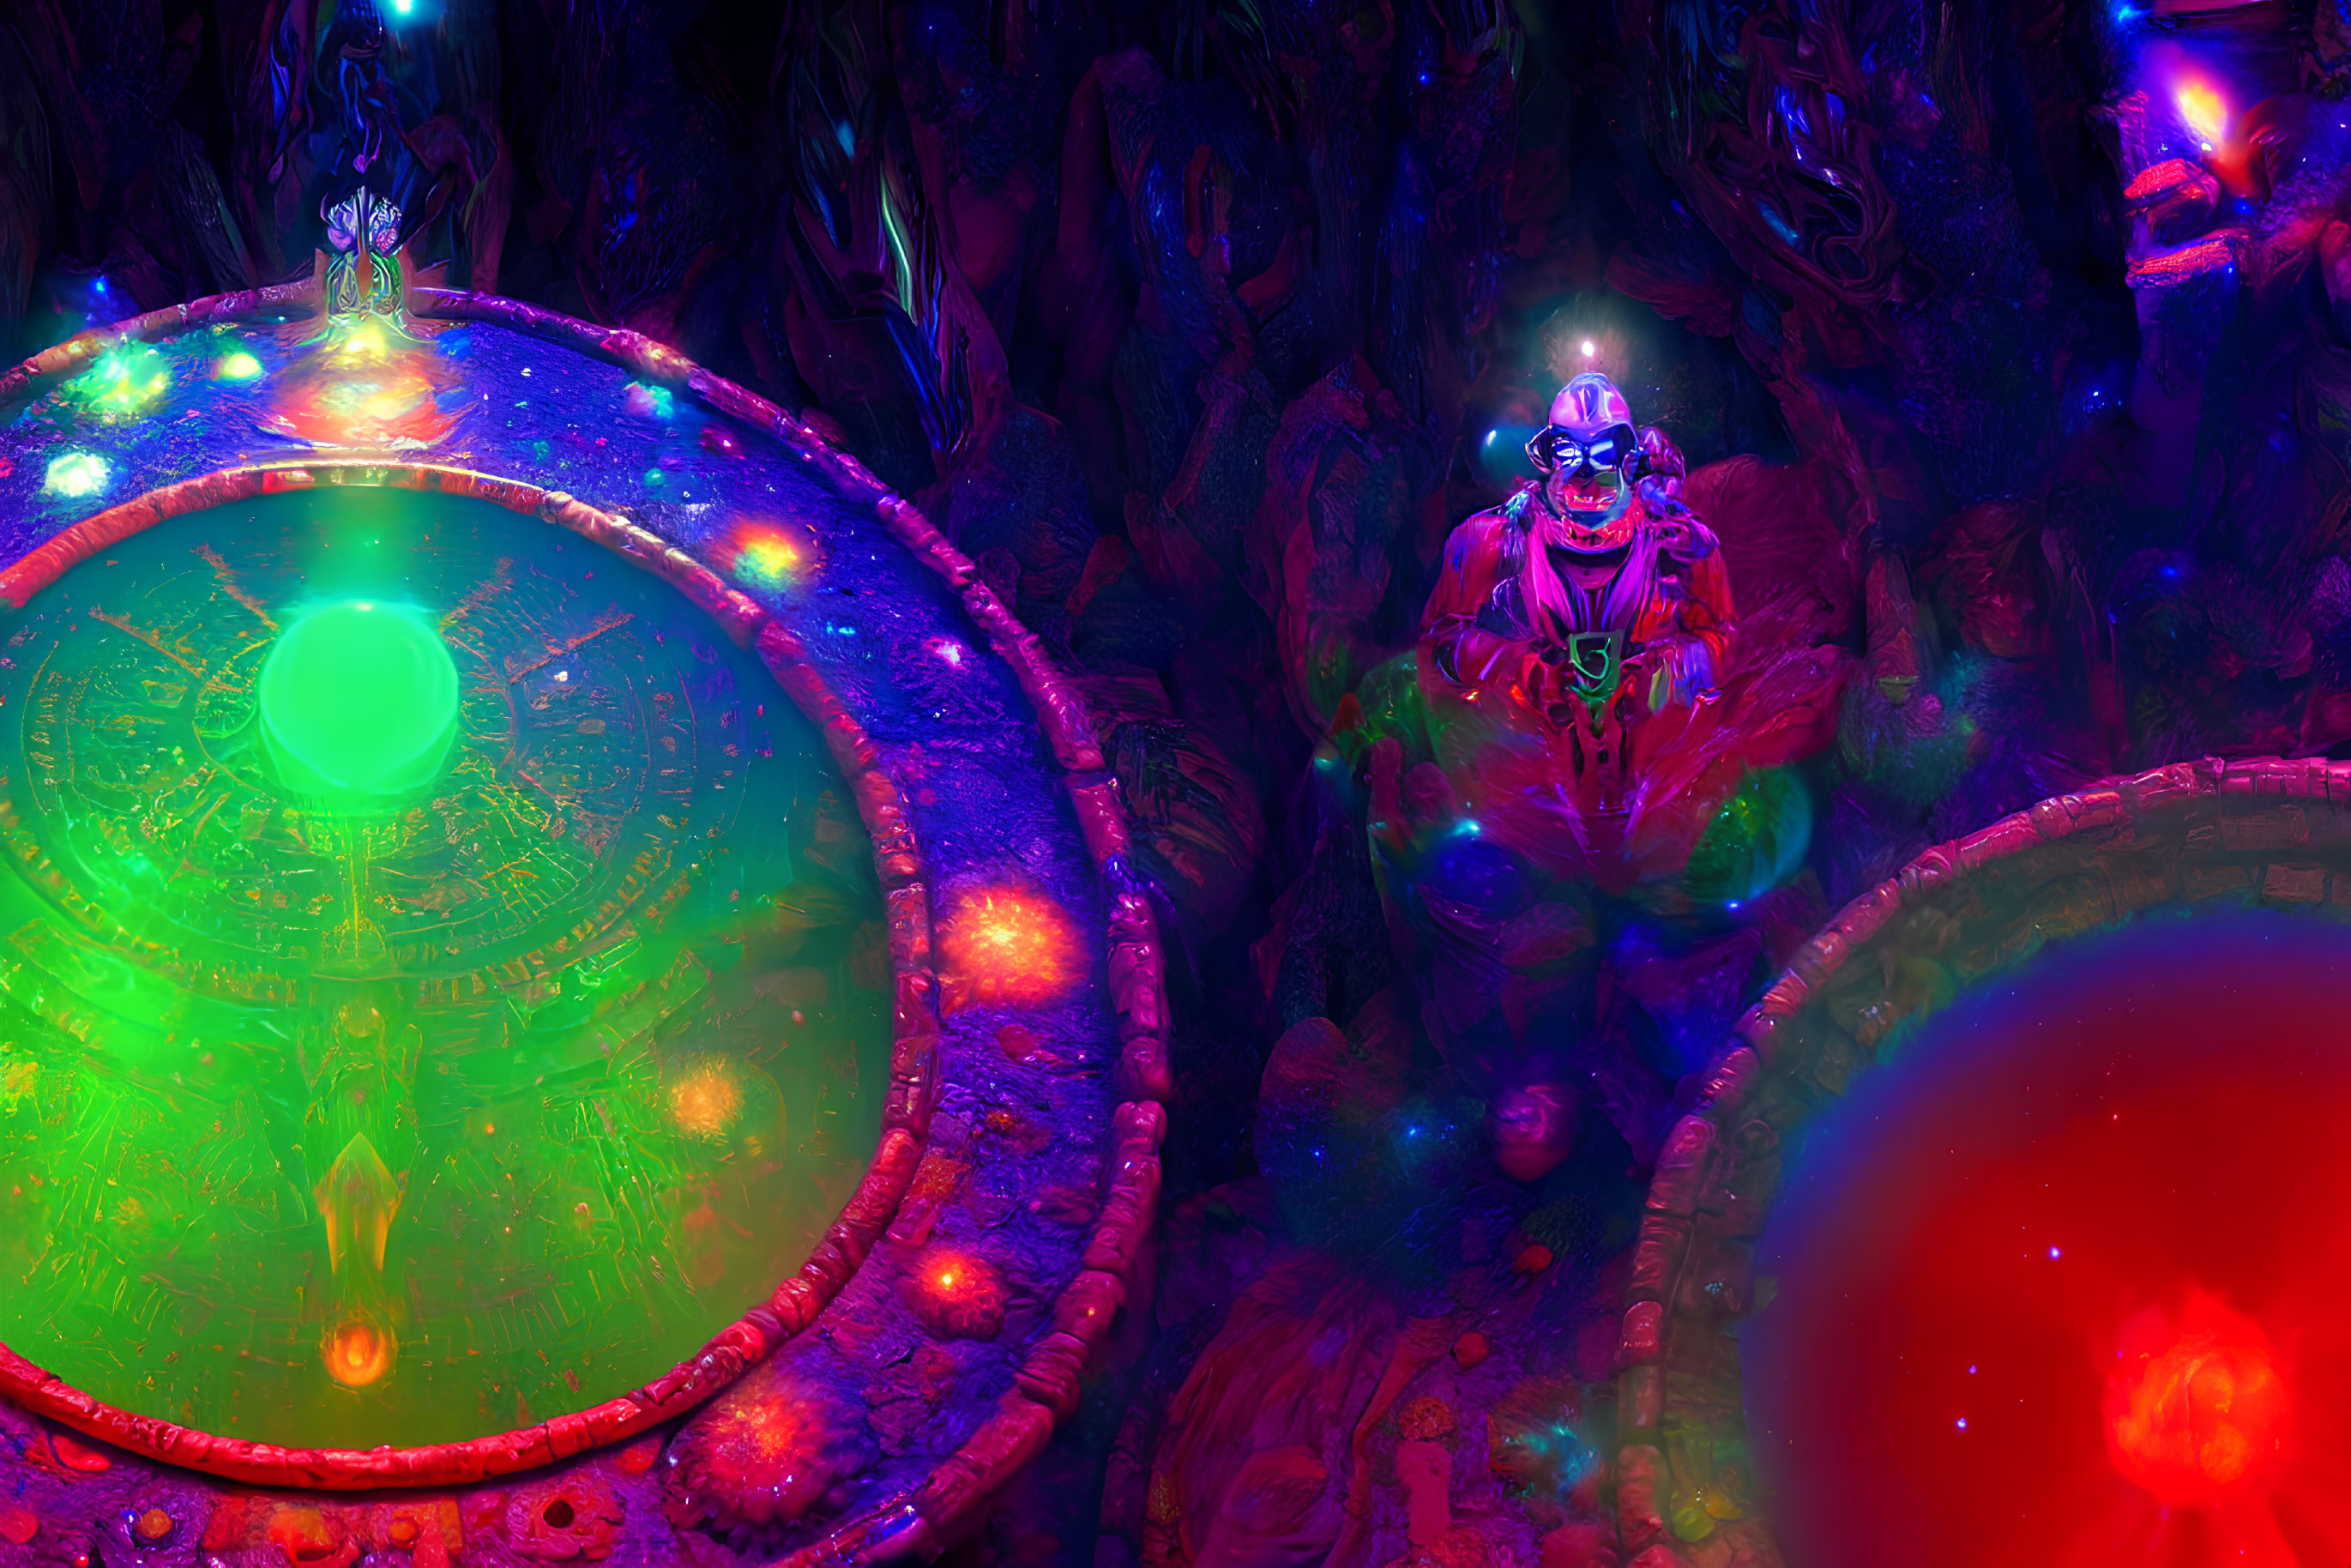 Mystical creatures in vibrant fantasy scene with neon-lit flora